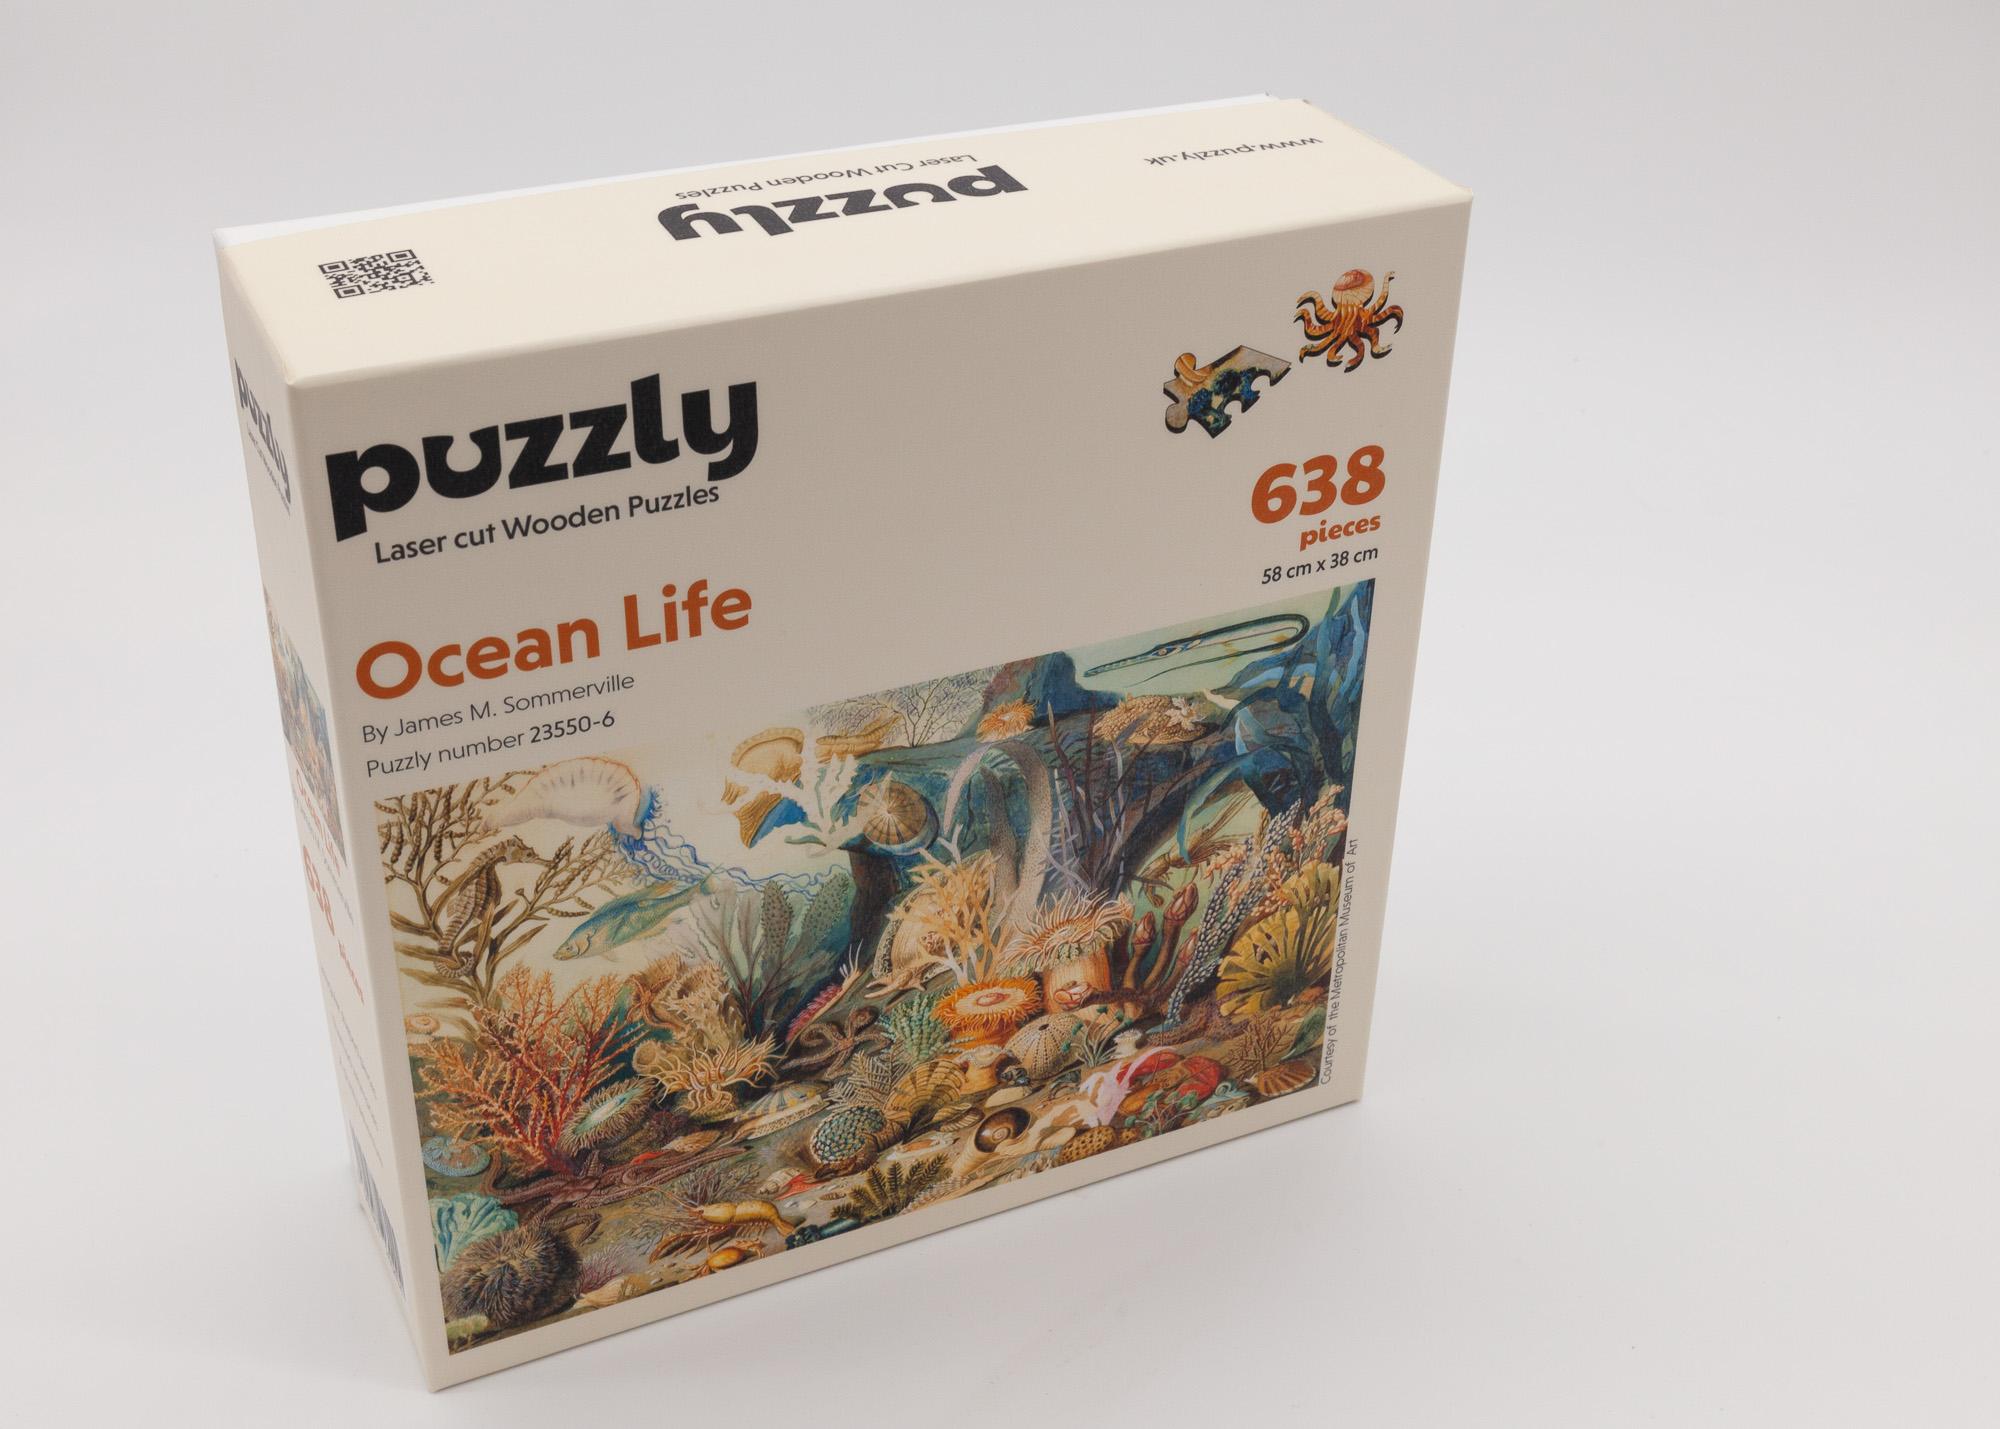 Ocean Life 638 piece wooden jigsaw puzzle